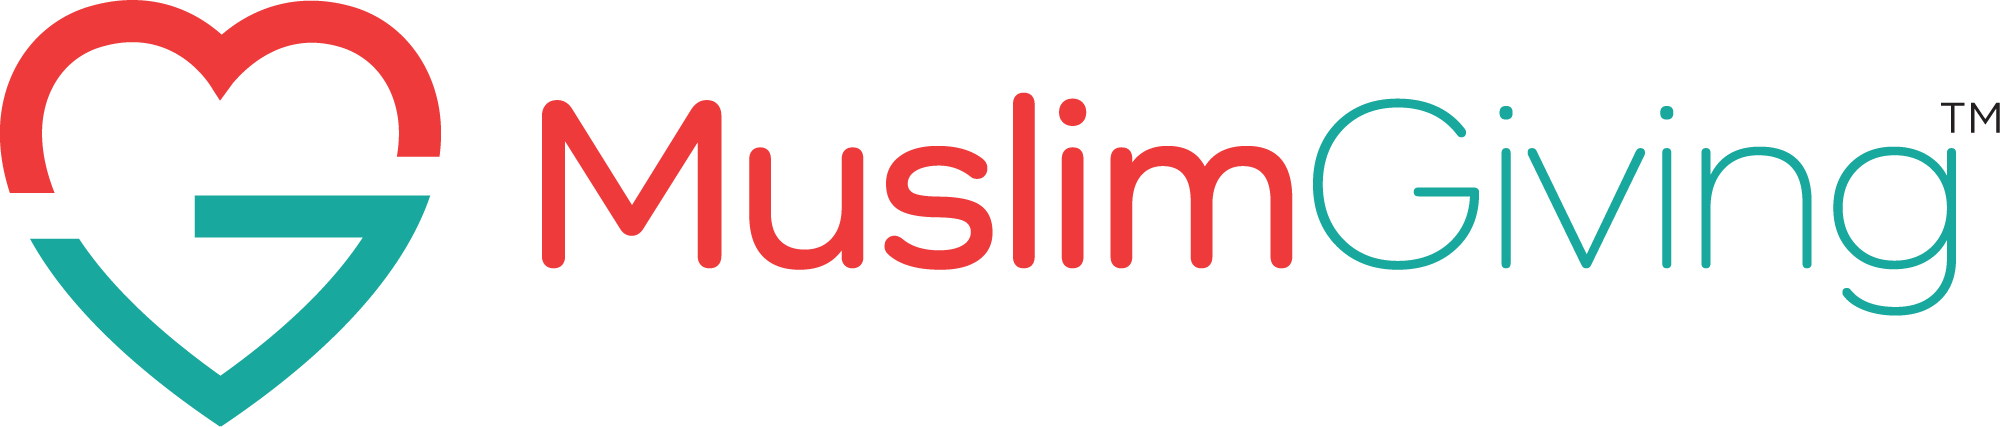 Giving Logo - Online fundraising, fundraising ideas, donate online - MuslimGiving